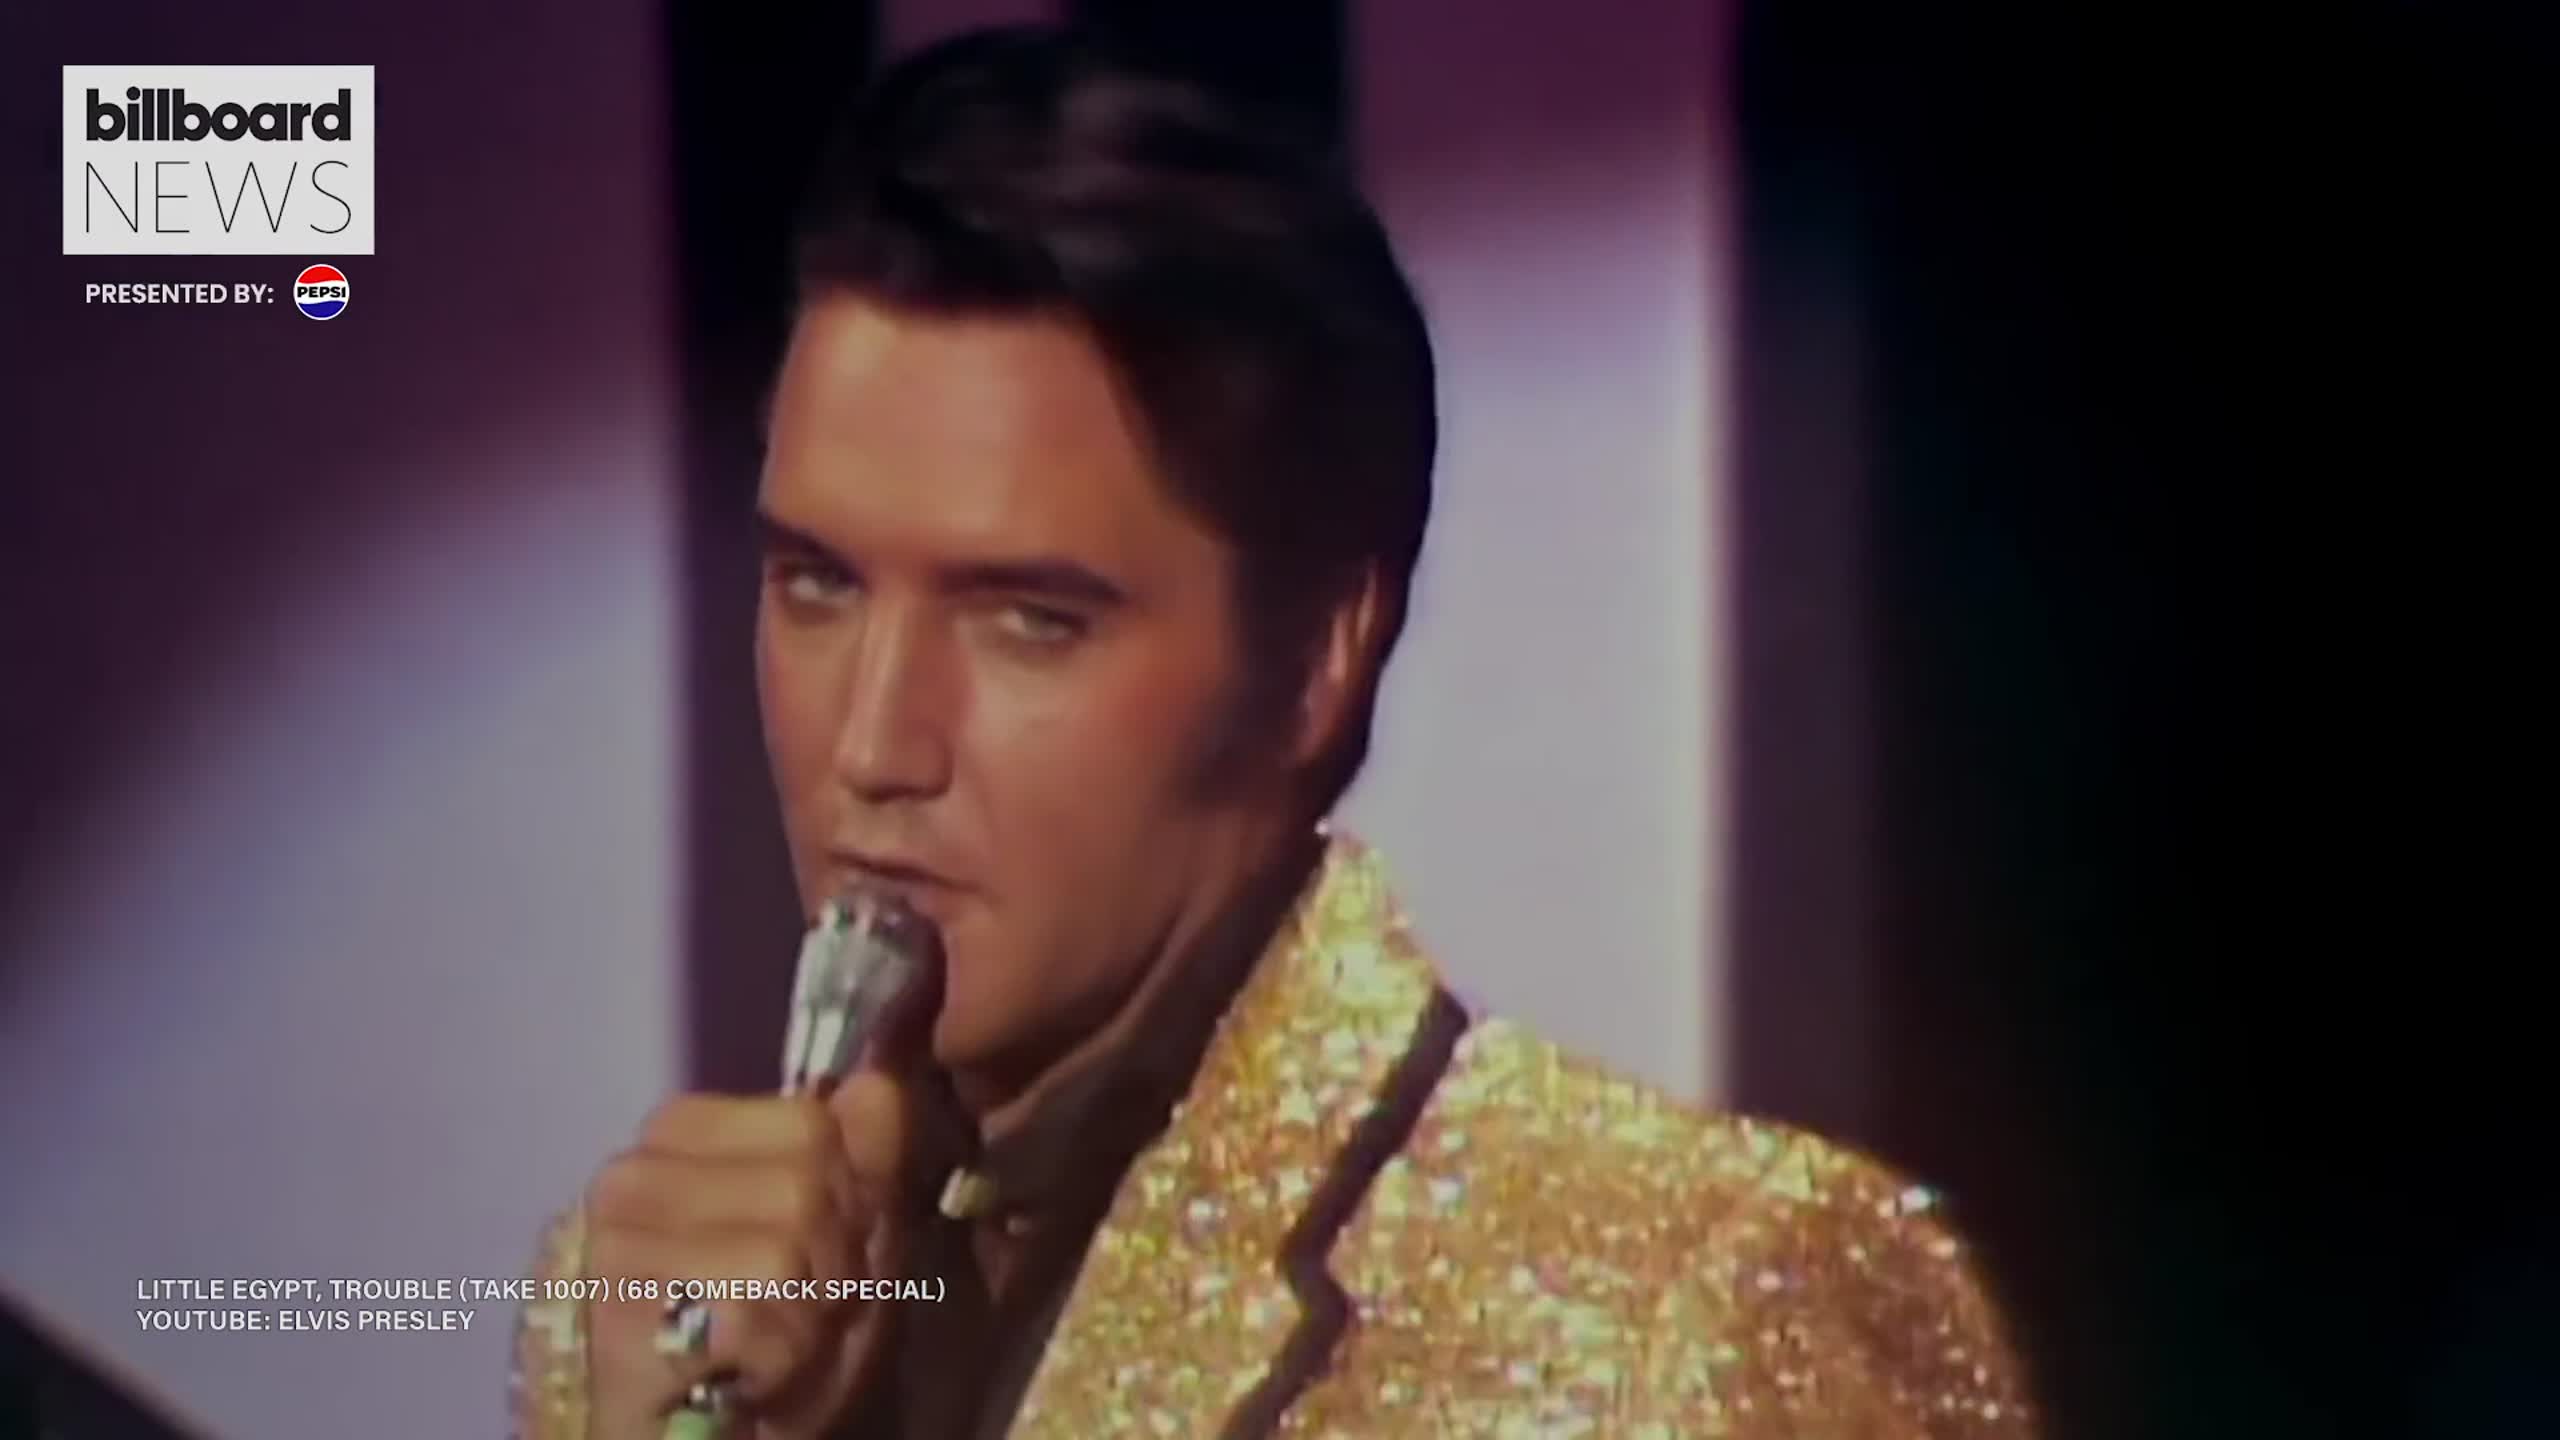 Elvis Presley - Trouble (Official Audio) 